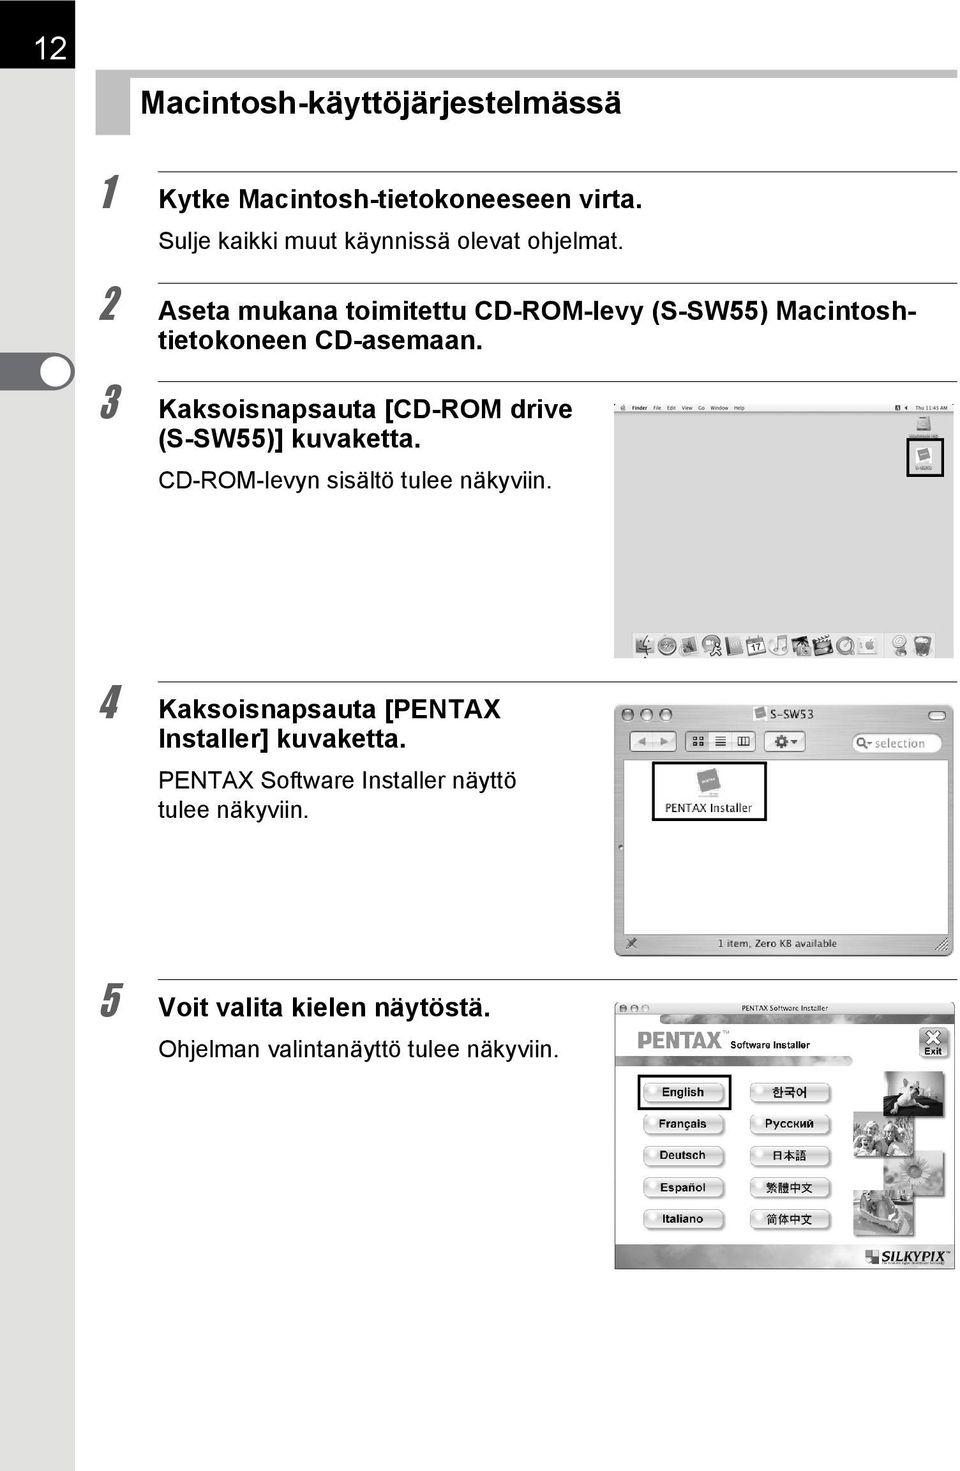 2 Aseta mukana toimitettu CD-ROM-levy (S-SW55) Macintoshtietokoneen CD-asemaan.